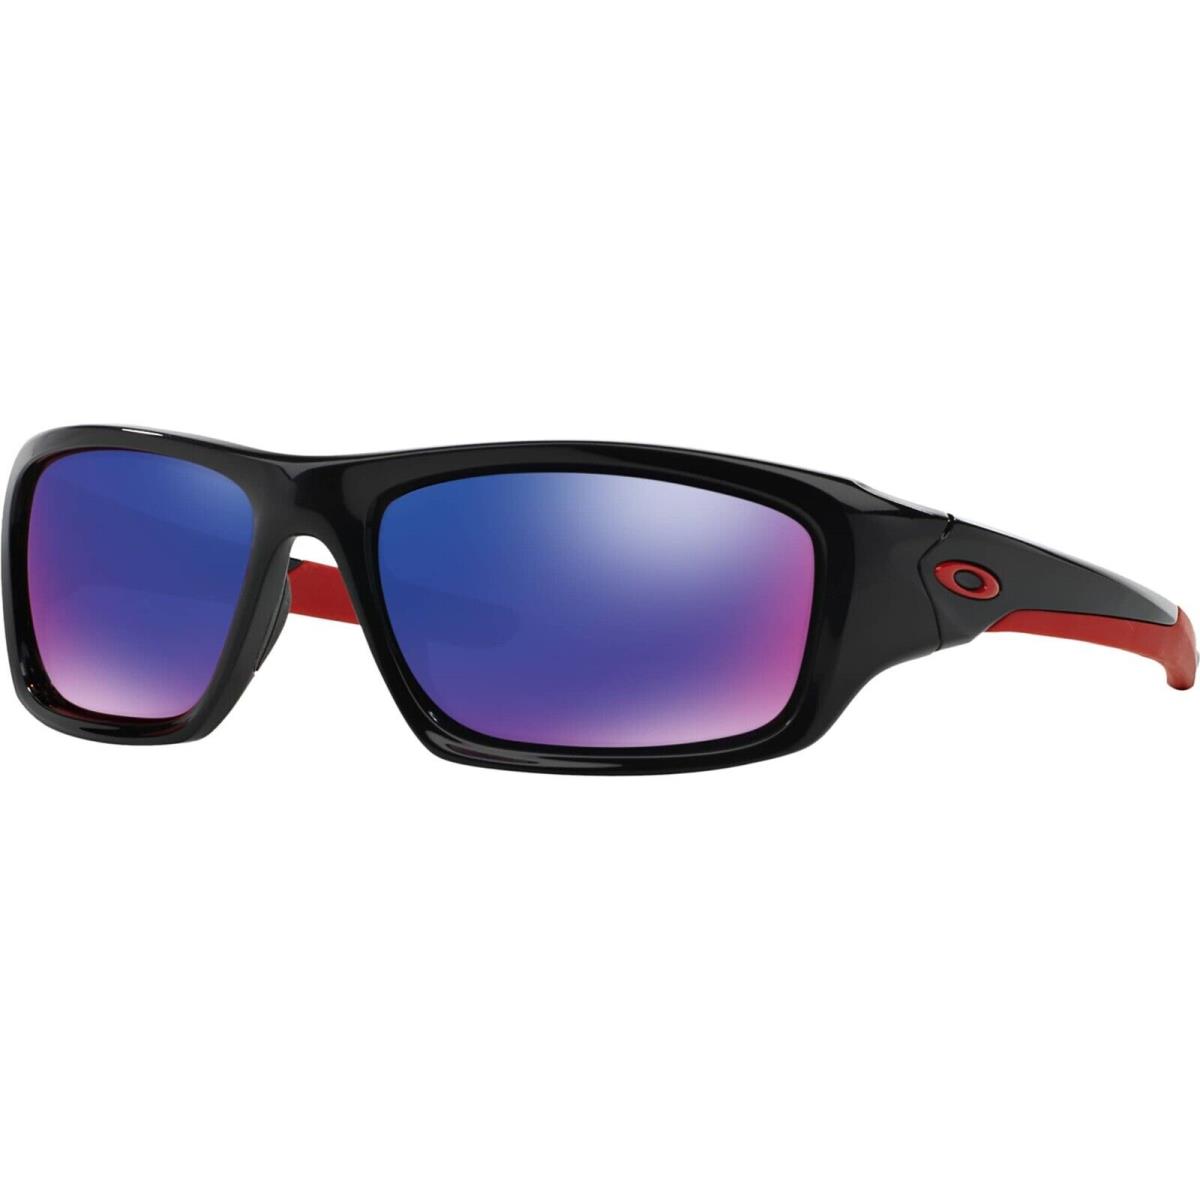 Men`s Oakley Valve Sunglasses Polished Black/positive Red Iridium Lens - Frame: Polished Black, Lens: Positive Red Iridium